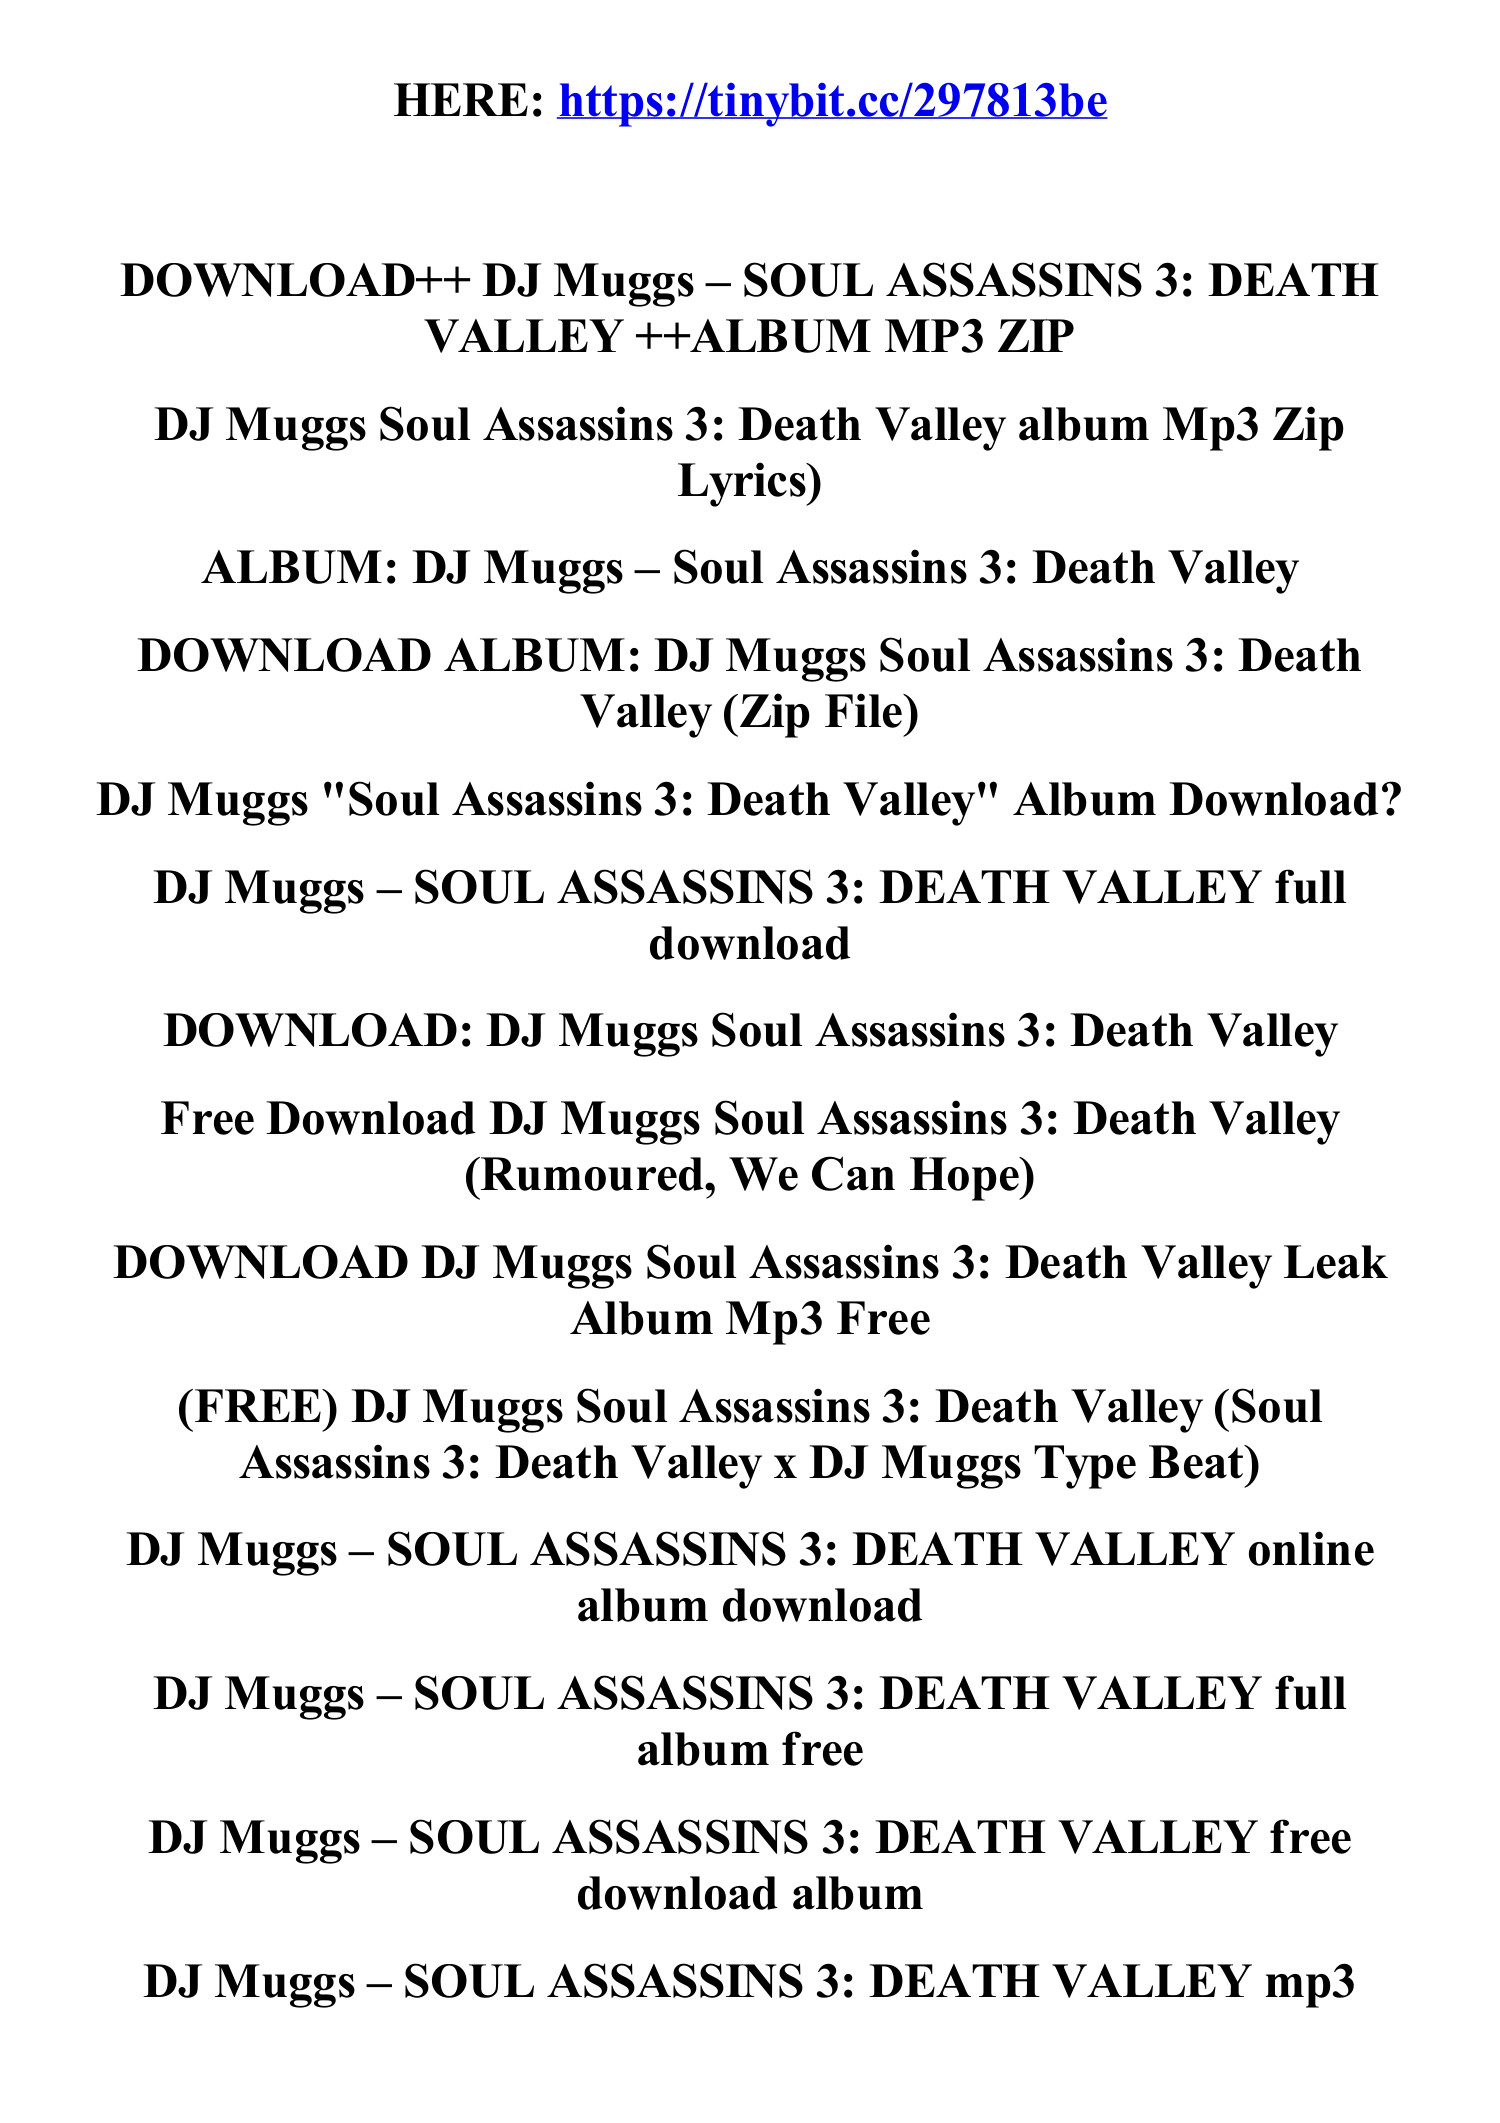 download_dj_muggs_soul_assassins_3_death_valley_album_mp3_zip.pdf